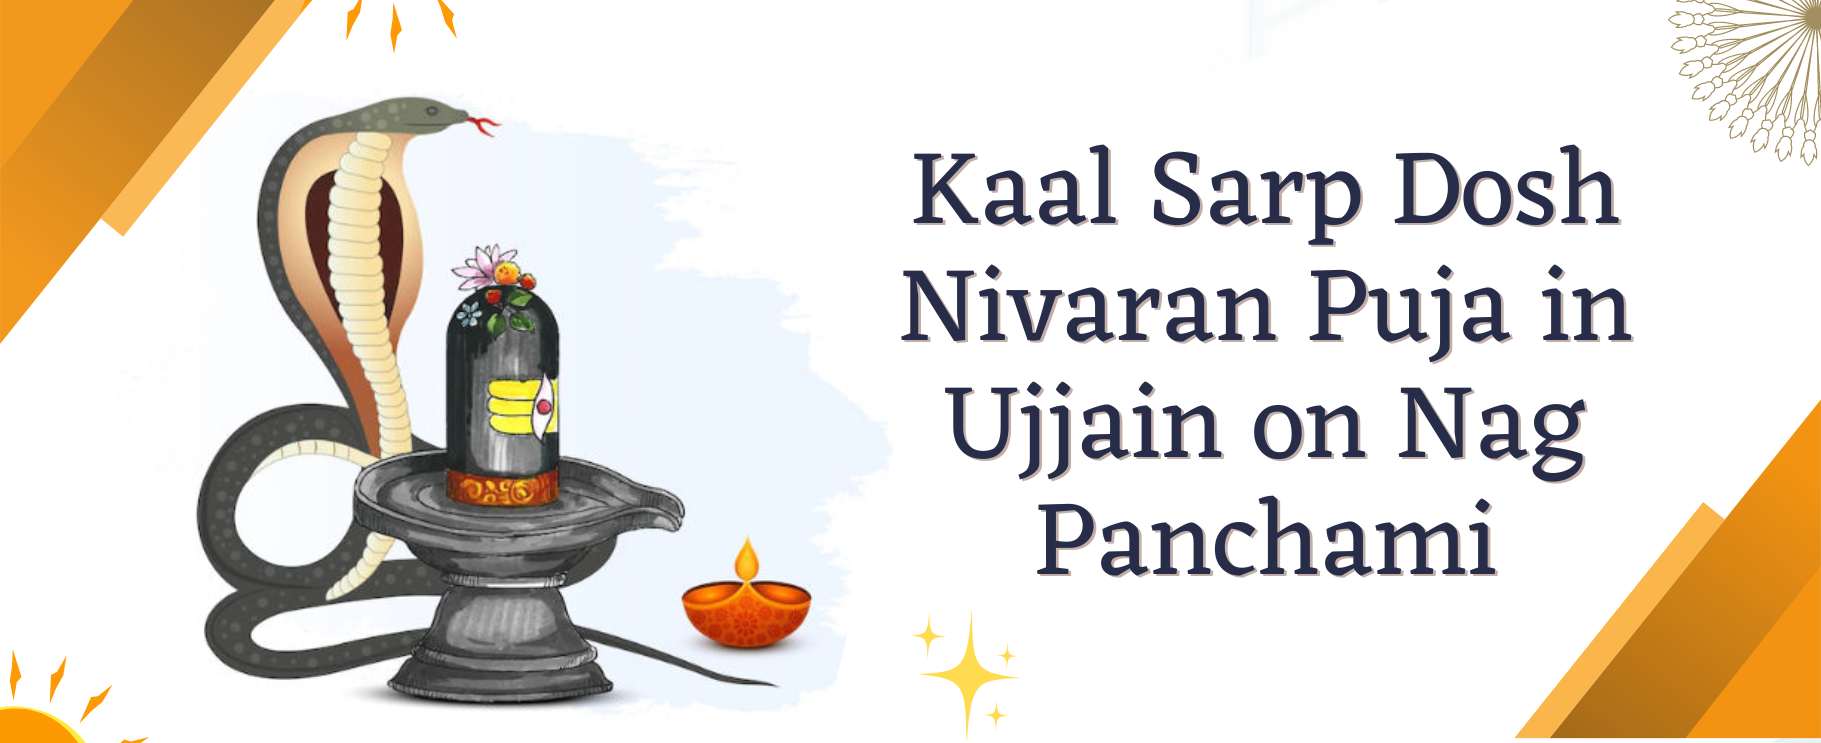 Kaal-Sarp-Dosh-Nivaran-Puja-in-Ujjain-on-Nag-Panchami